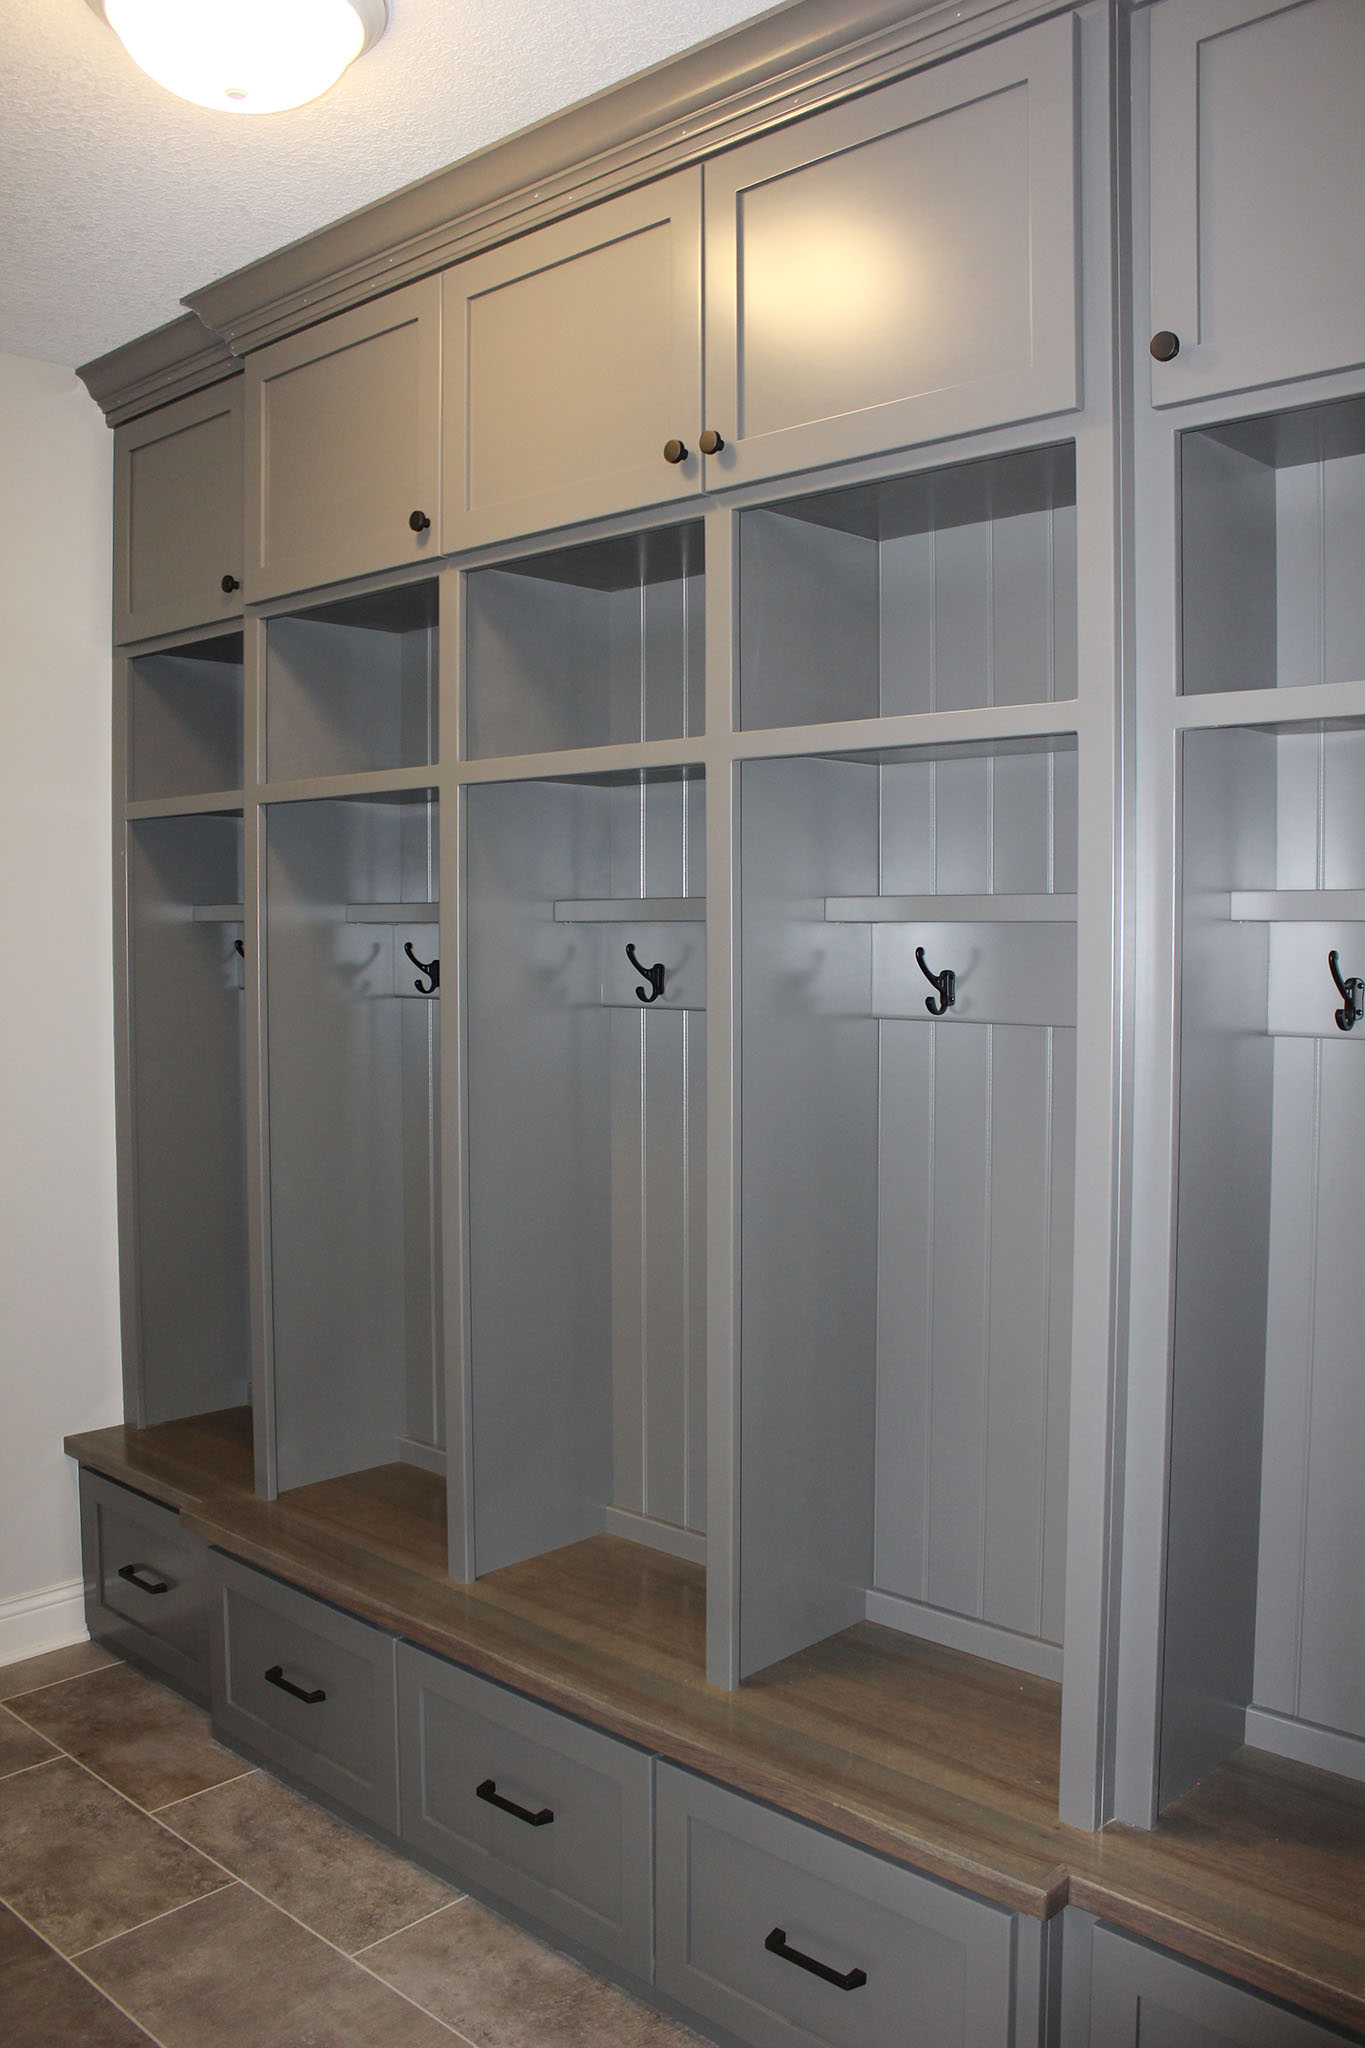 Mudroom custom individual locker system with wood seat, coat hooks, drawer storage below, shelf and cabinet storage above